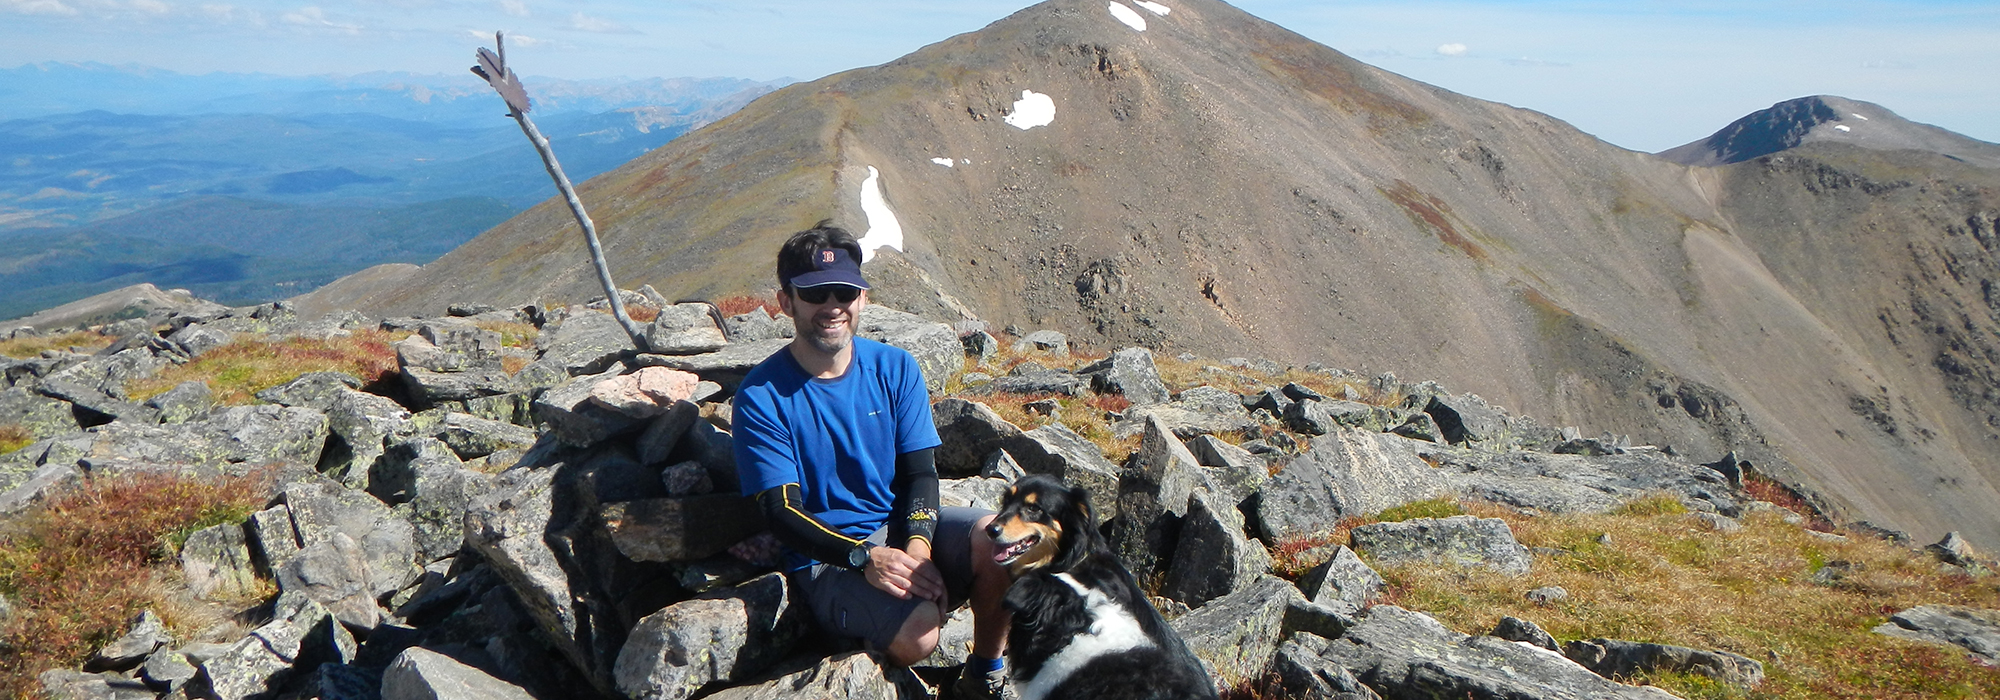 Author James Dziezynski with his dogs on Mount Eva Colorado